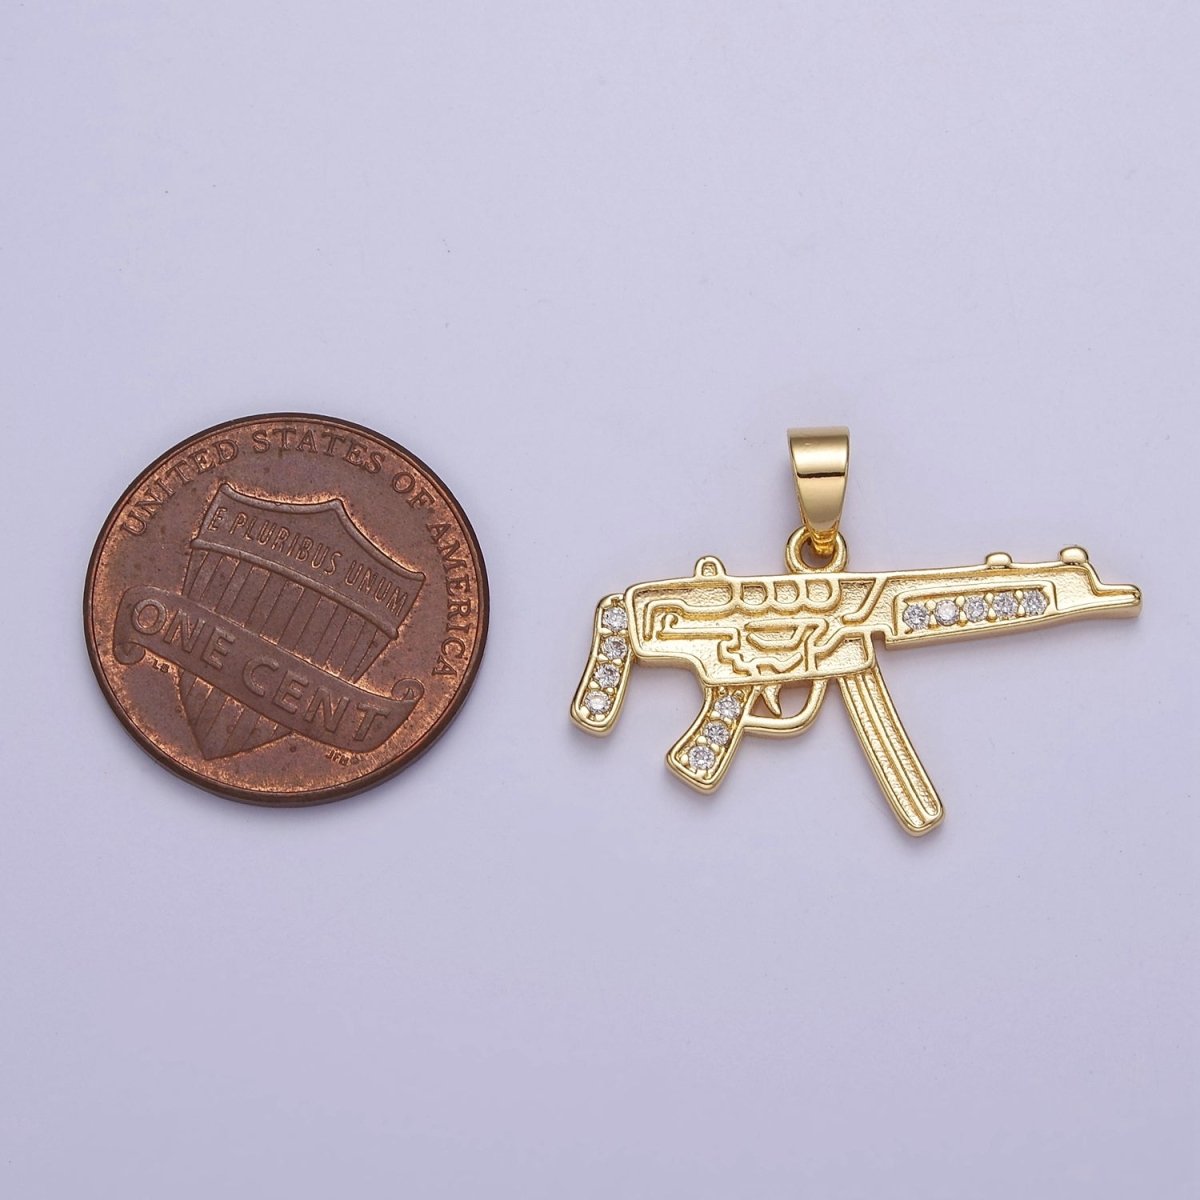 Micro Pave Machine Gun Shape Pendant 16K Gold Filled Gun Charm, Necklace Bracelet Charm Pendant 20.3x27.5mm J-445 - DLUXCA